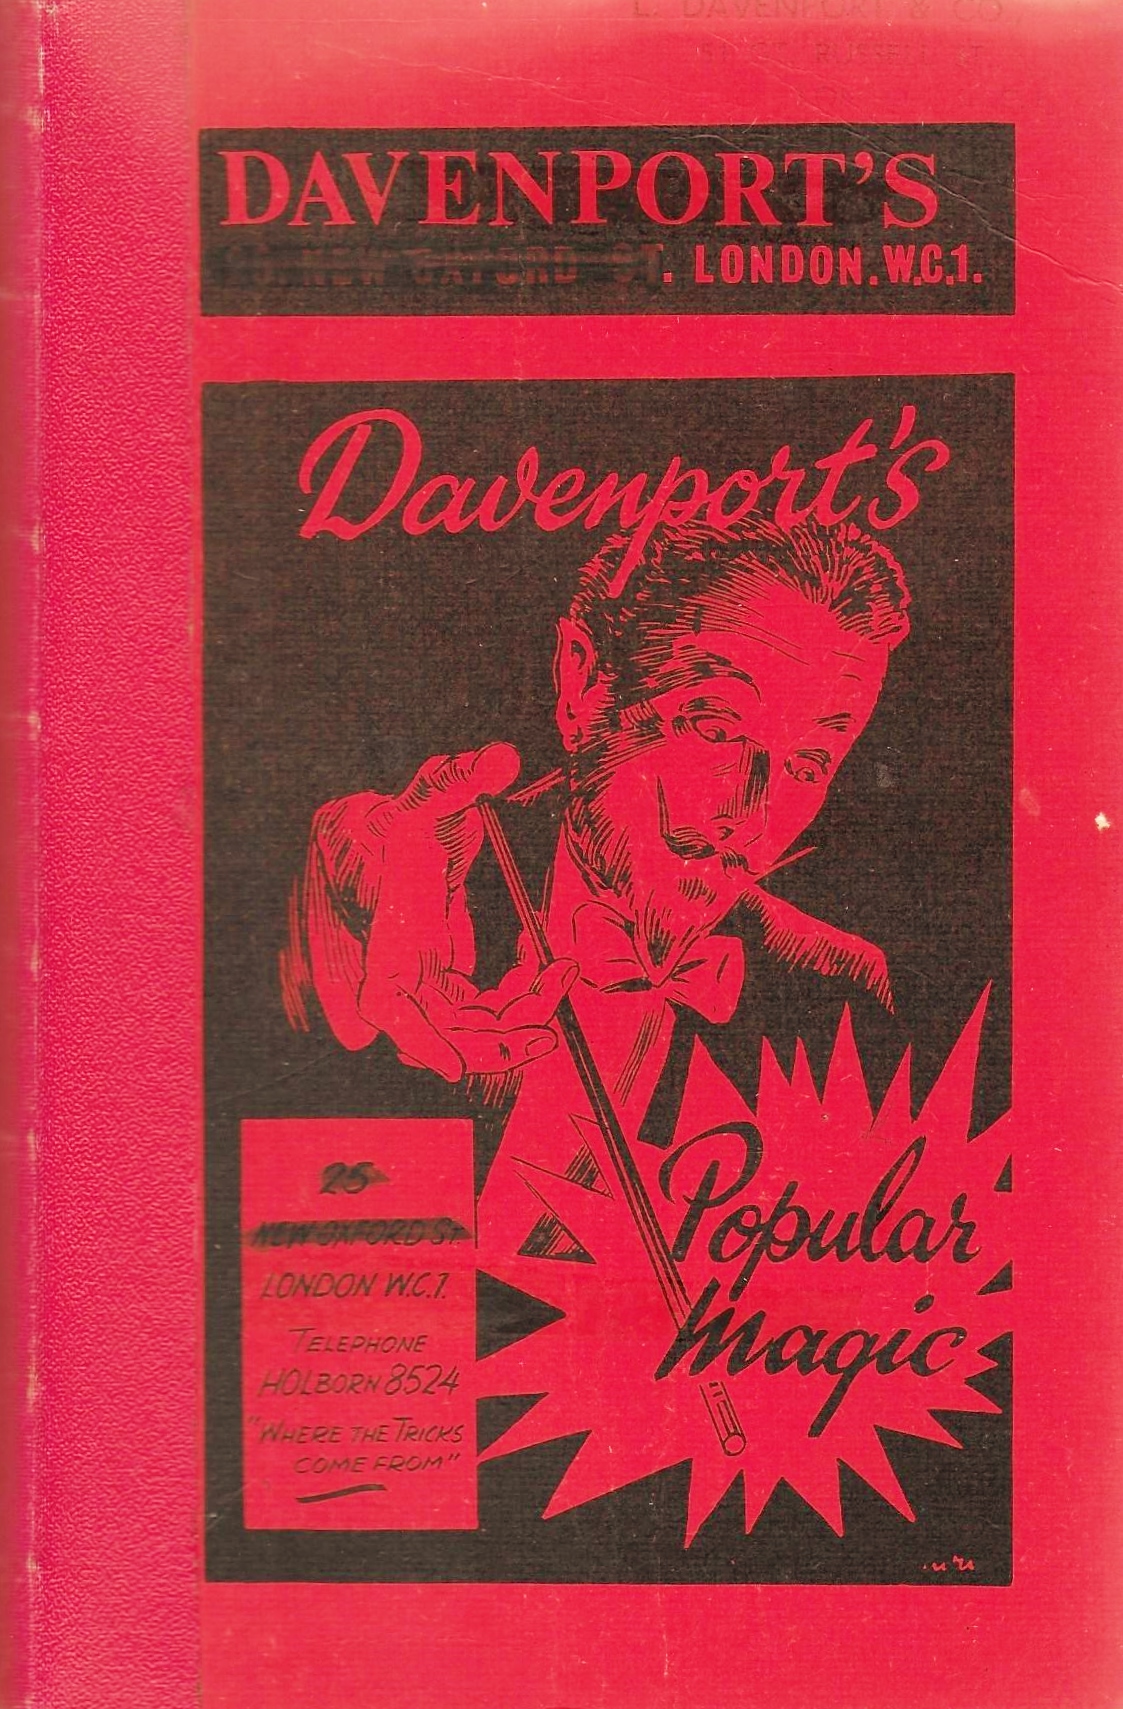 Davenports Popular Magic catalogue. Red cover, 1960